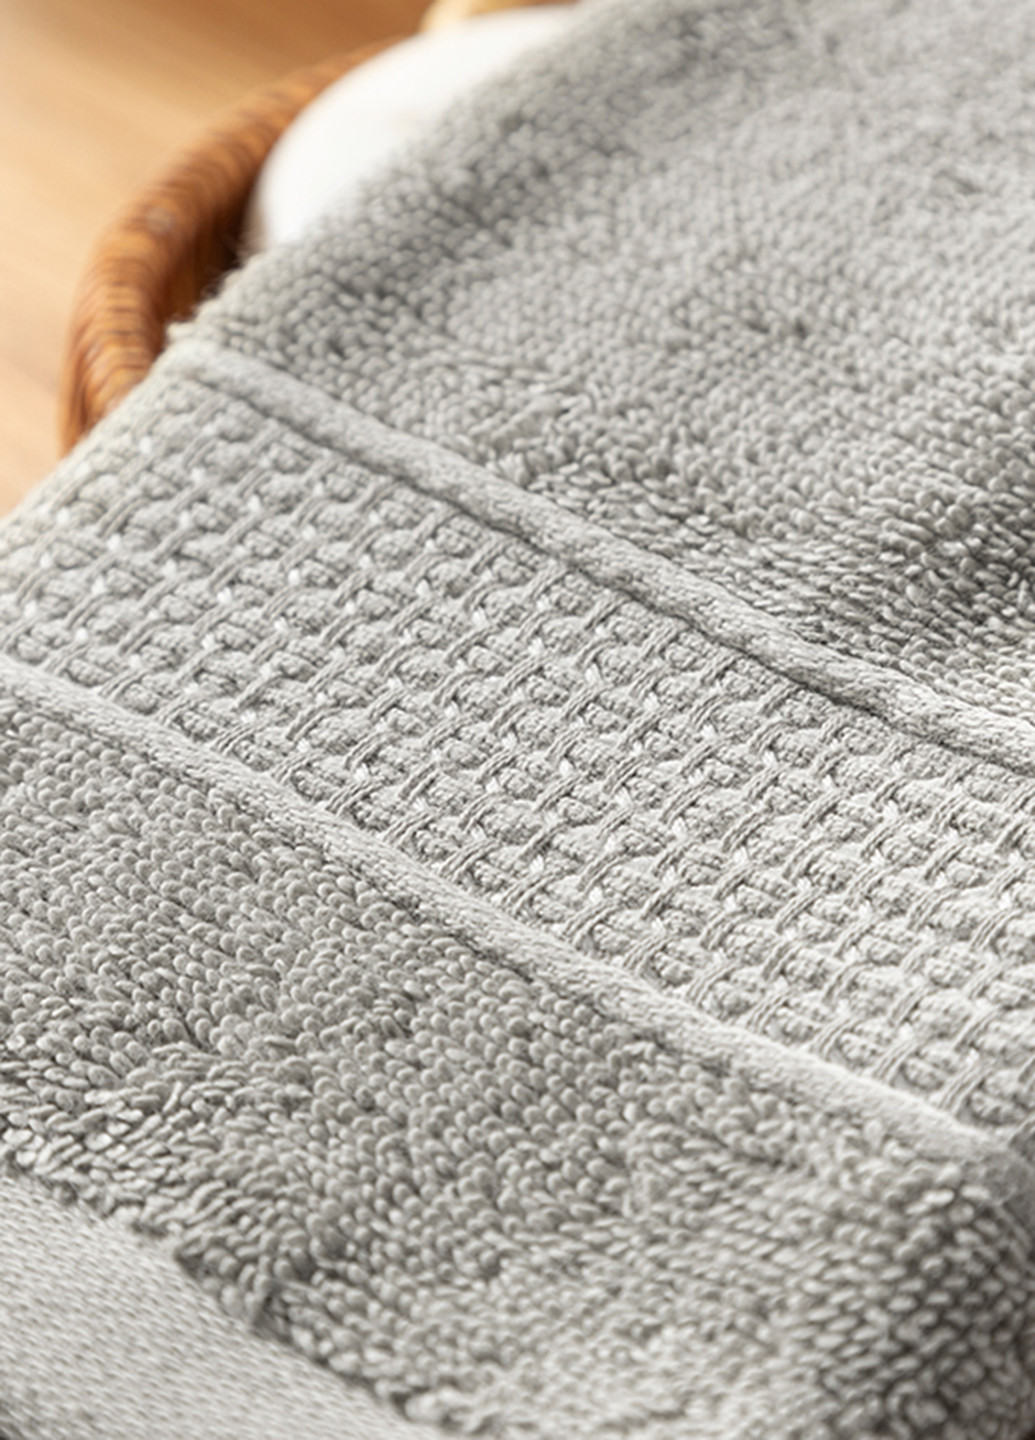 English Home полотенце для рук, 30х50 см однотонный светло-серый производство - Турция